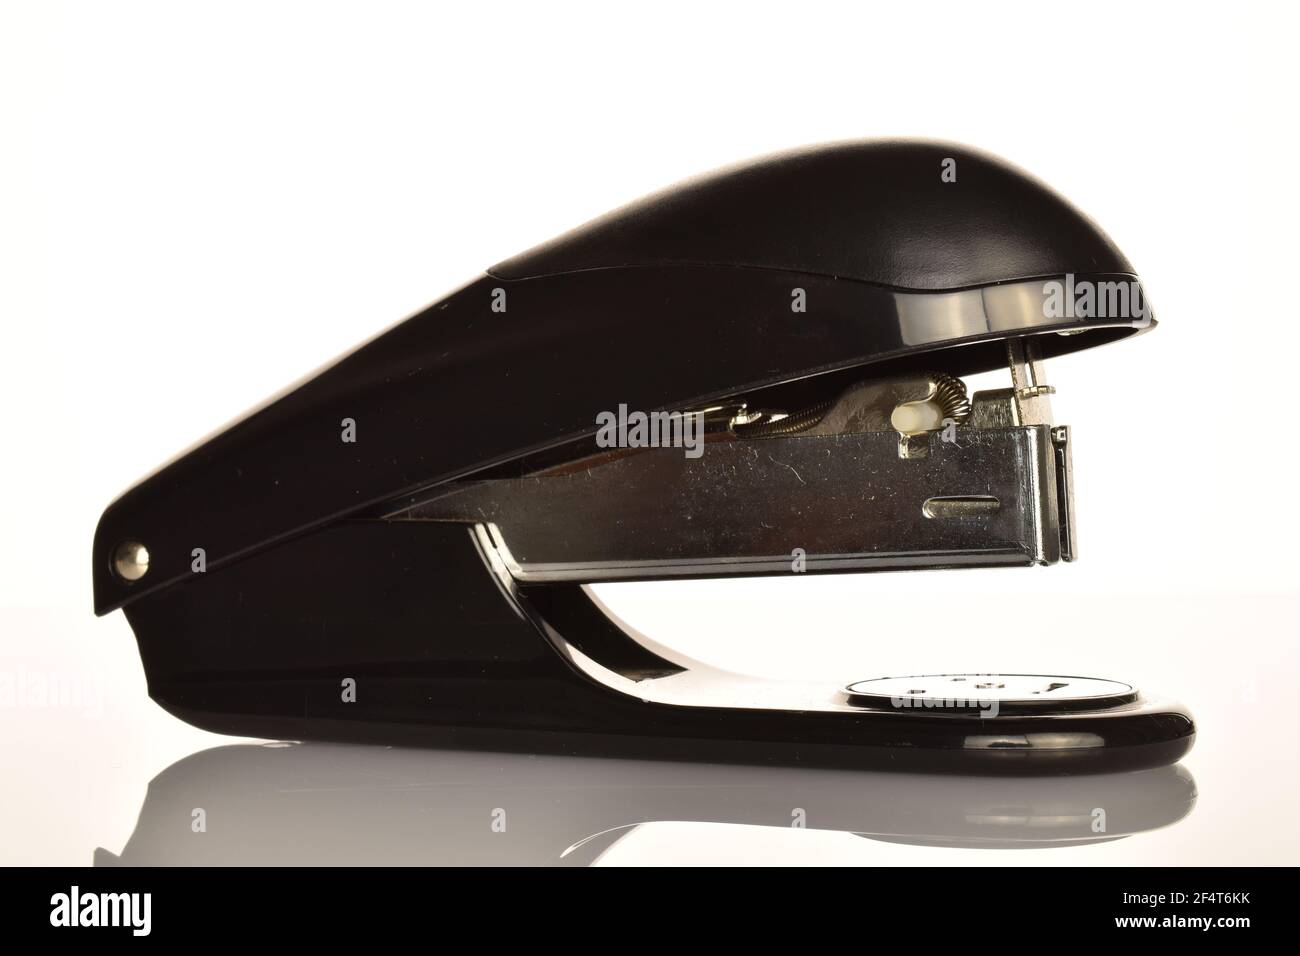 One stationery stapler, macro,  on a white background. Stock Photo